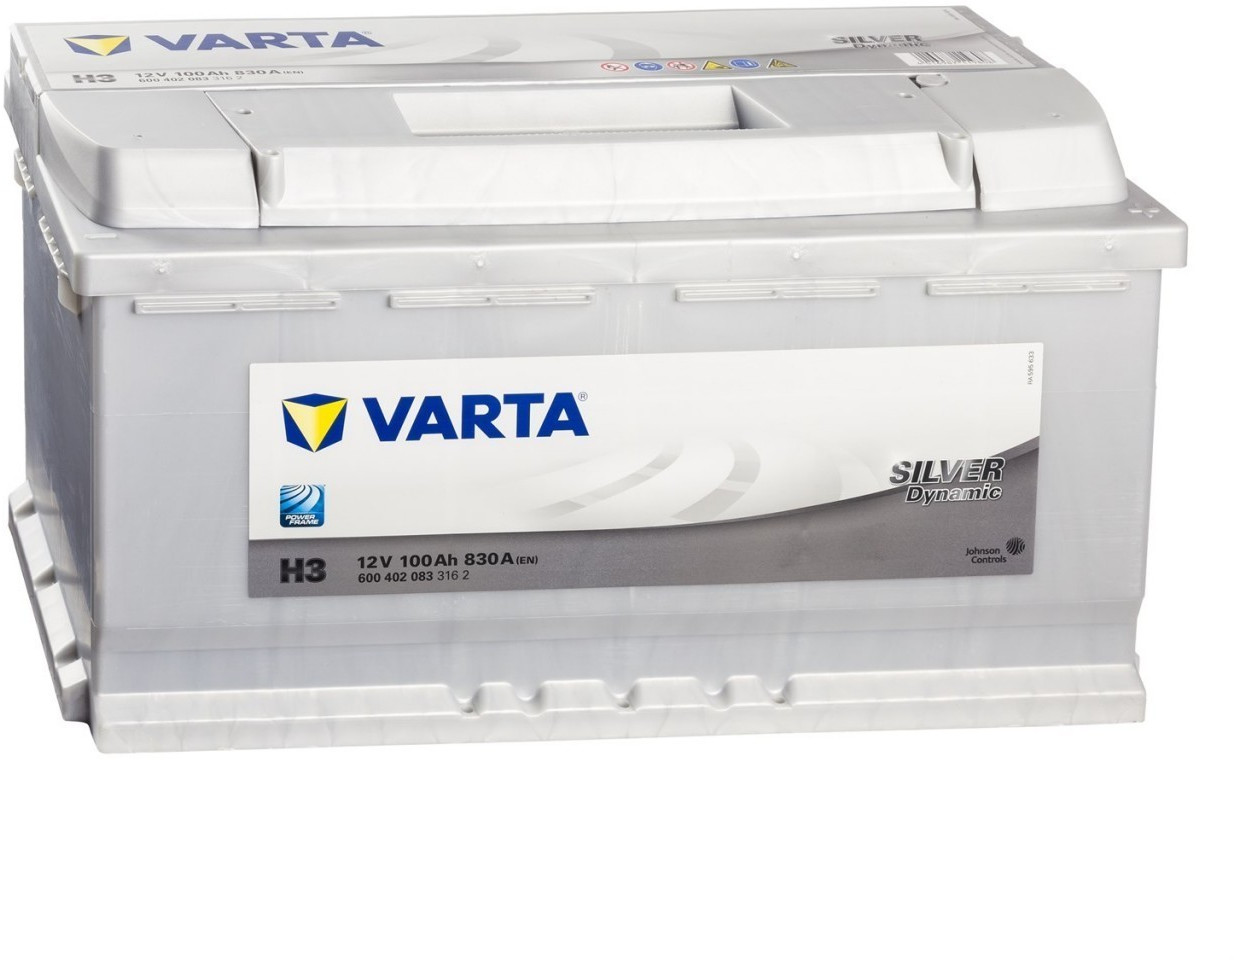 VARTA Battery SD563400061 12V 100Ah/830A SILVER DYNAMIC